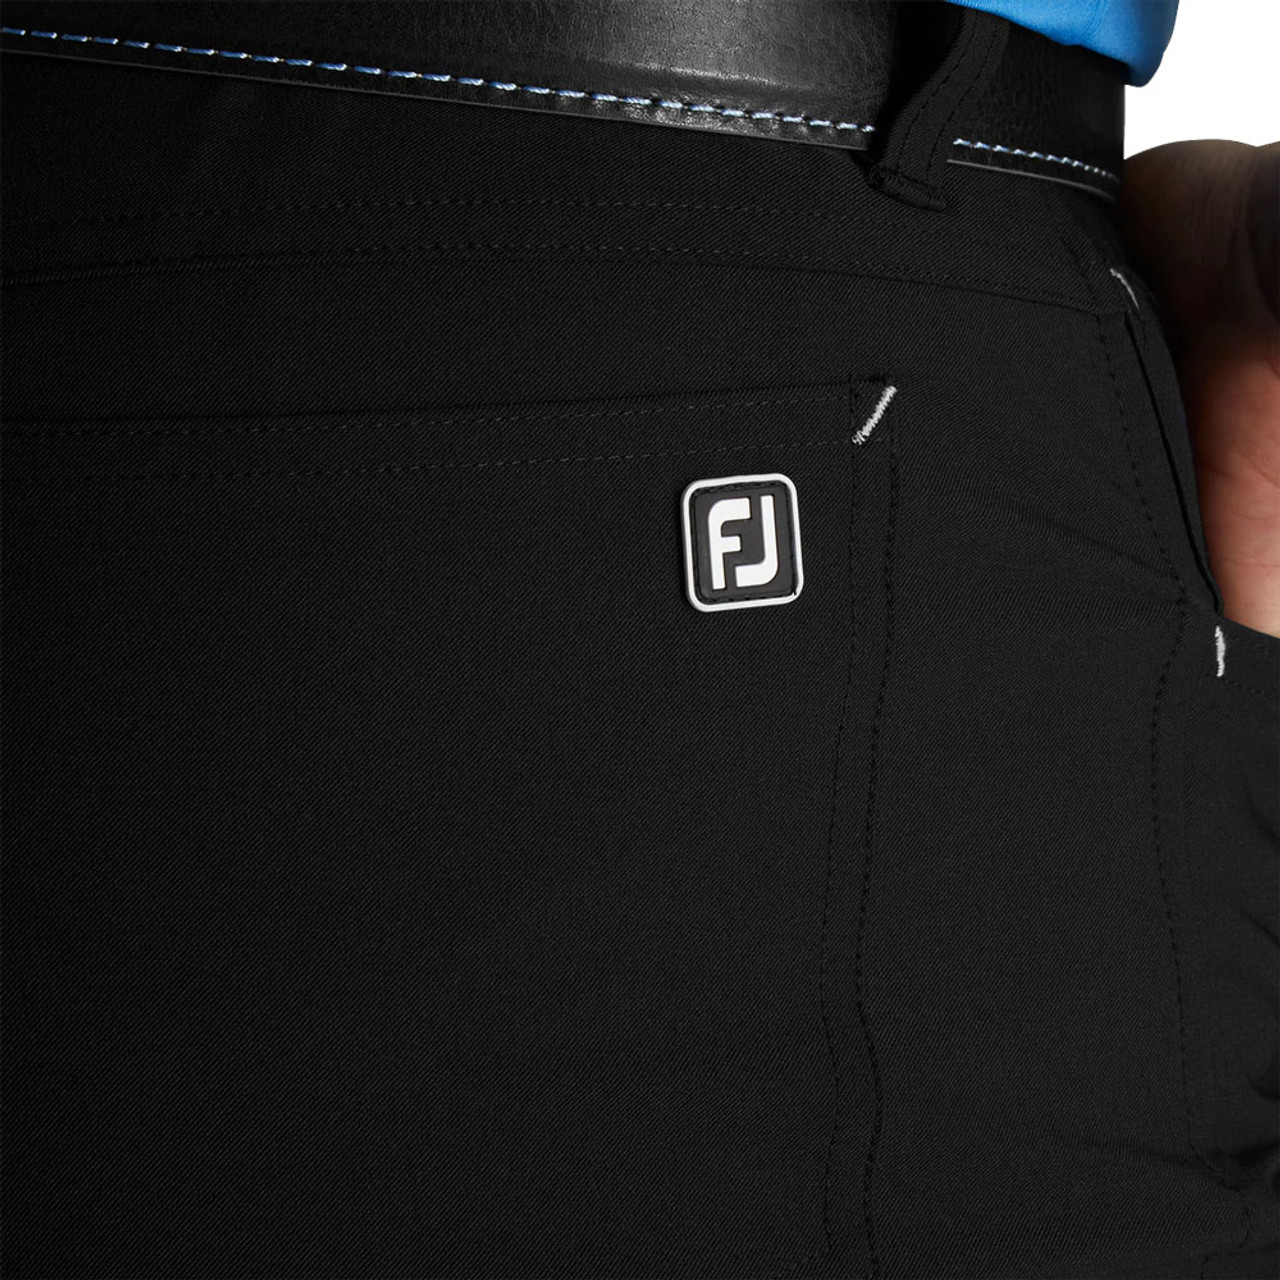 FootJoy HydroLite Jacket Clothing Review - Golfalot